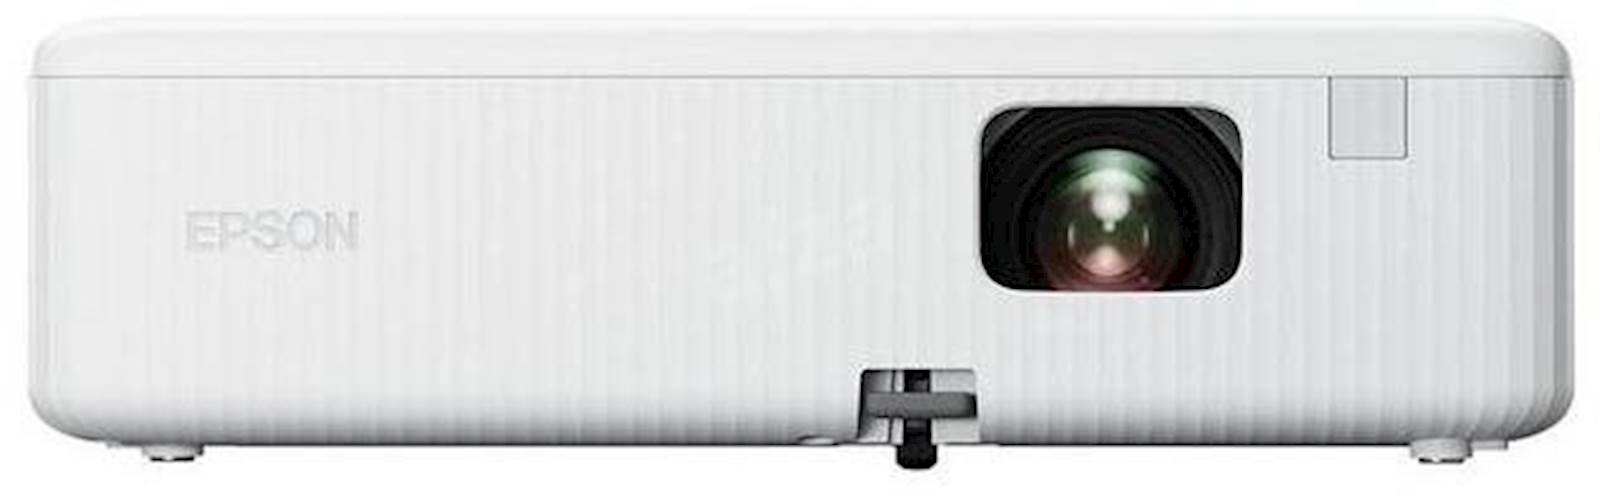 Projektor Epson Co-Fh01 Full HD